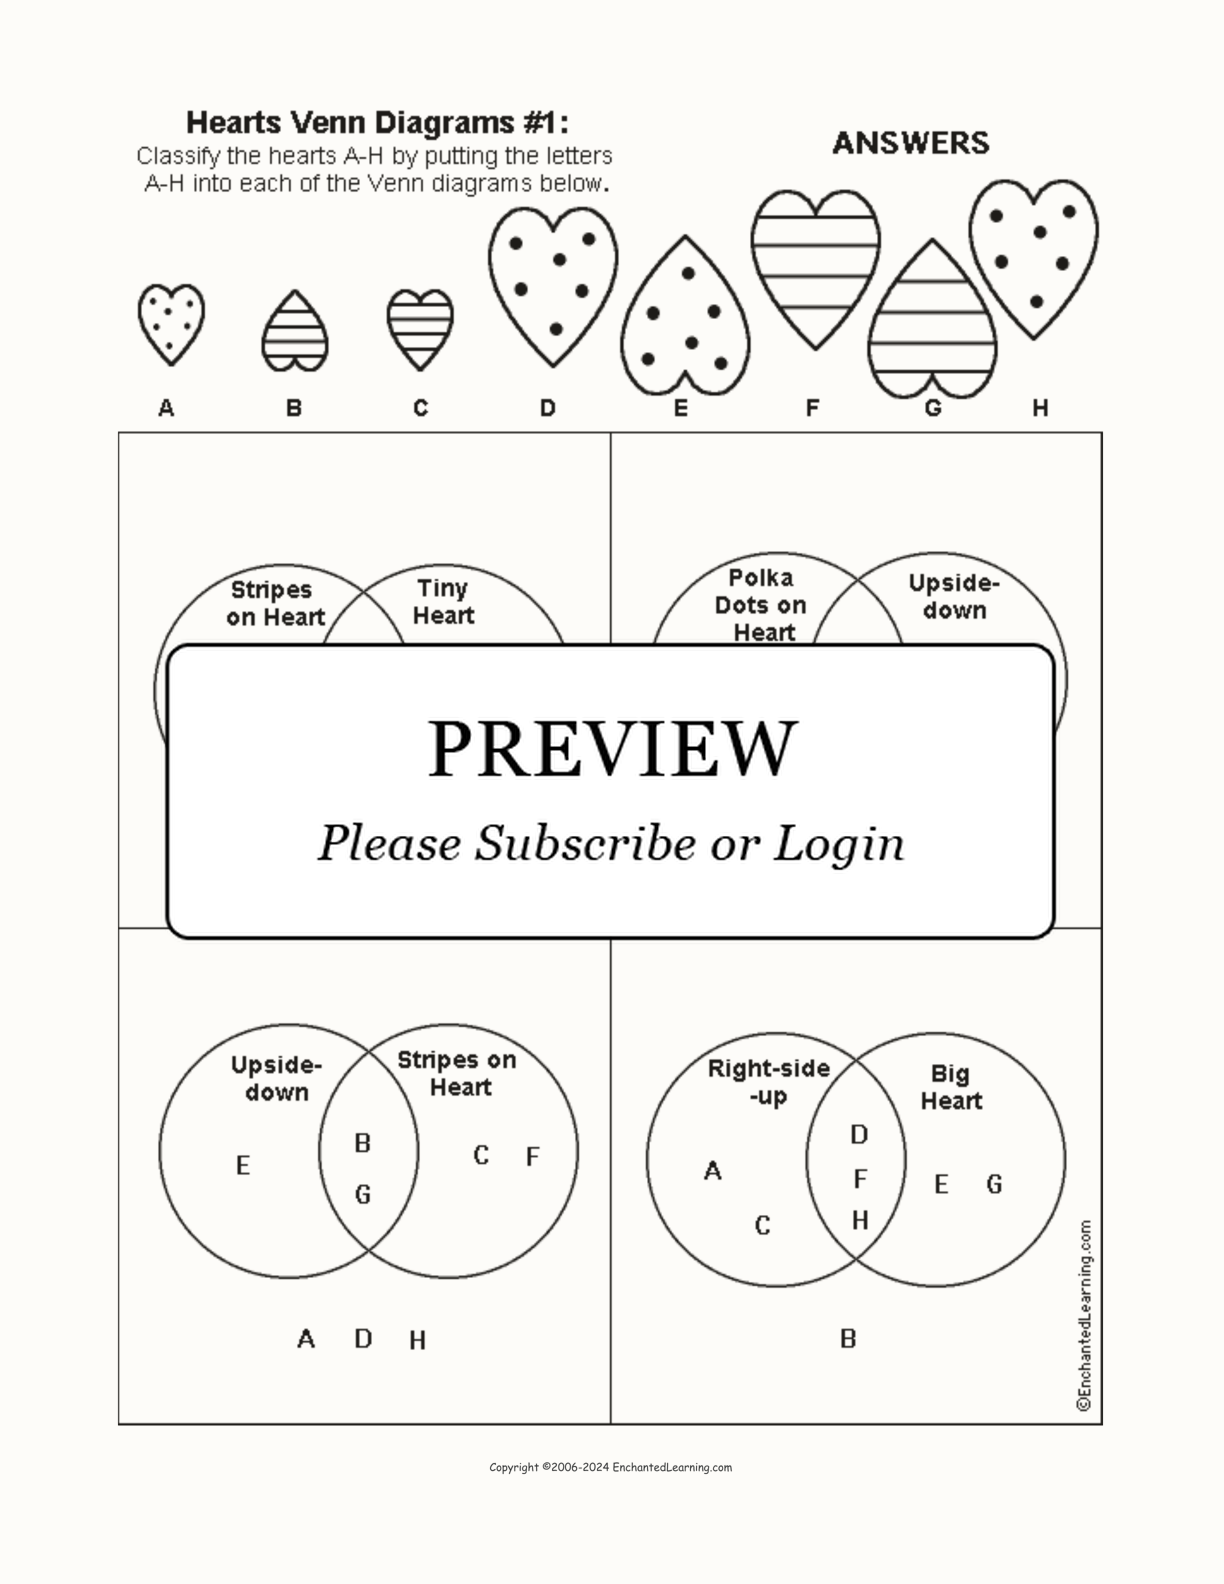 Hearts Venn Diagram #1 interactive worksheet page 2